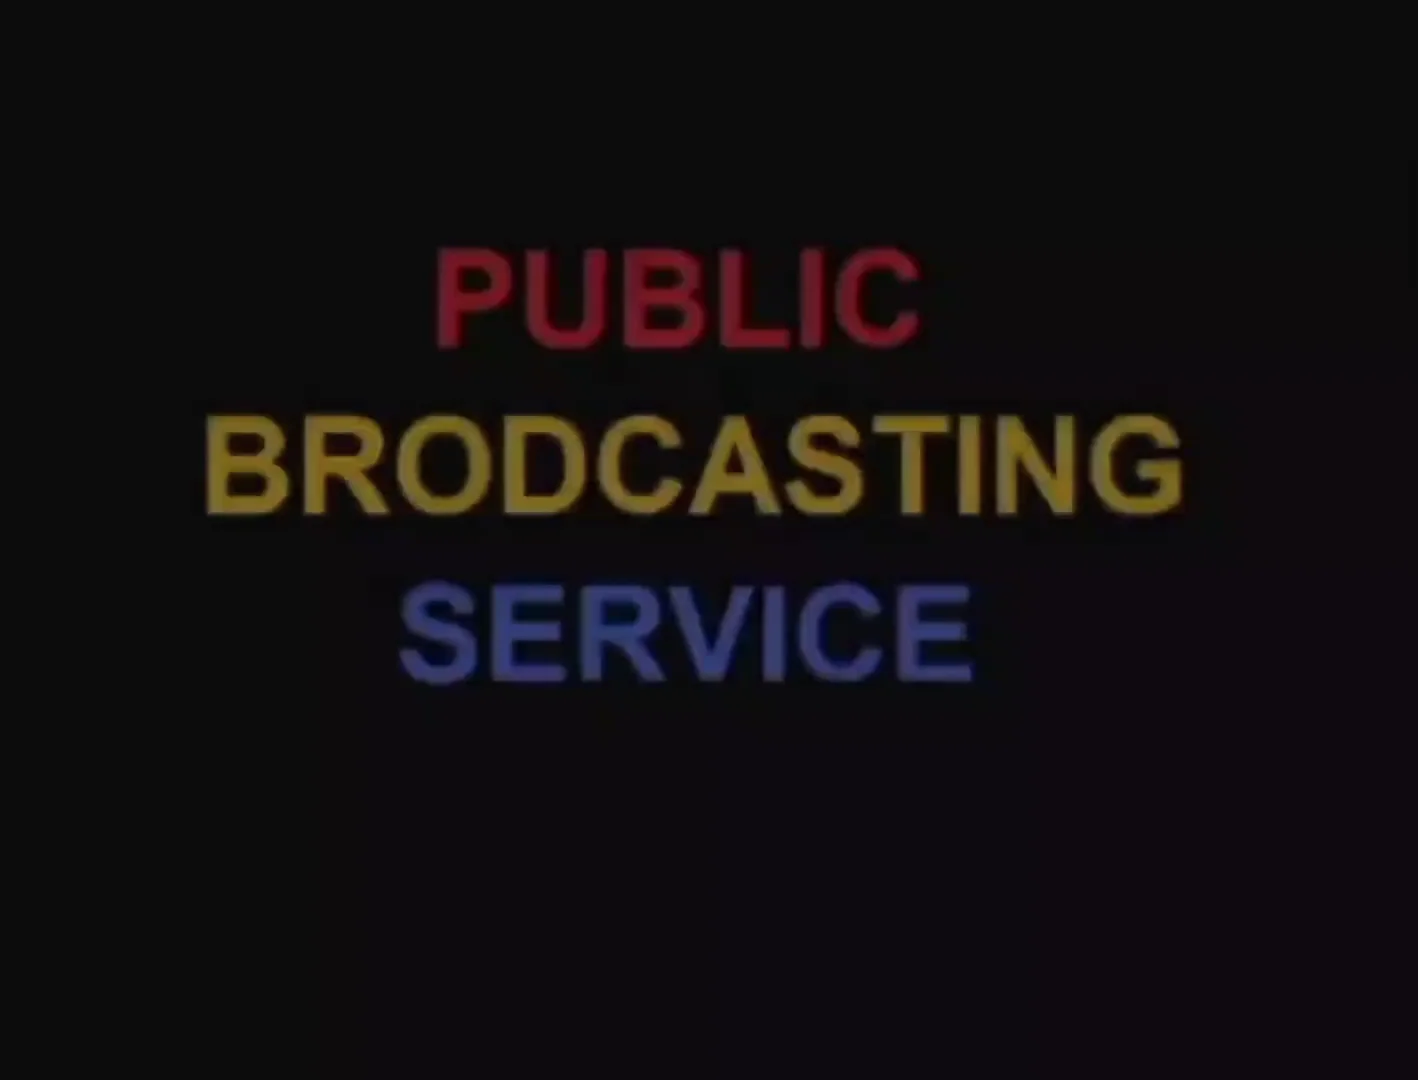 pbs logo 1970